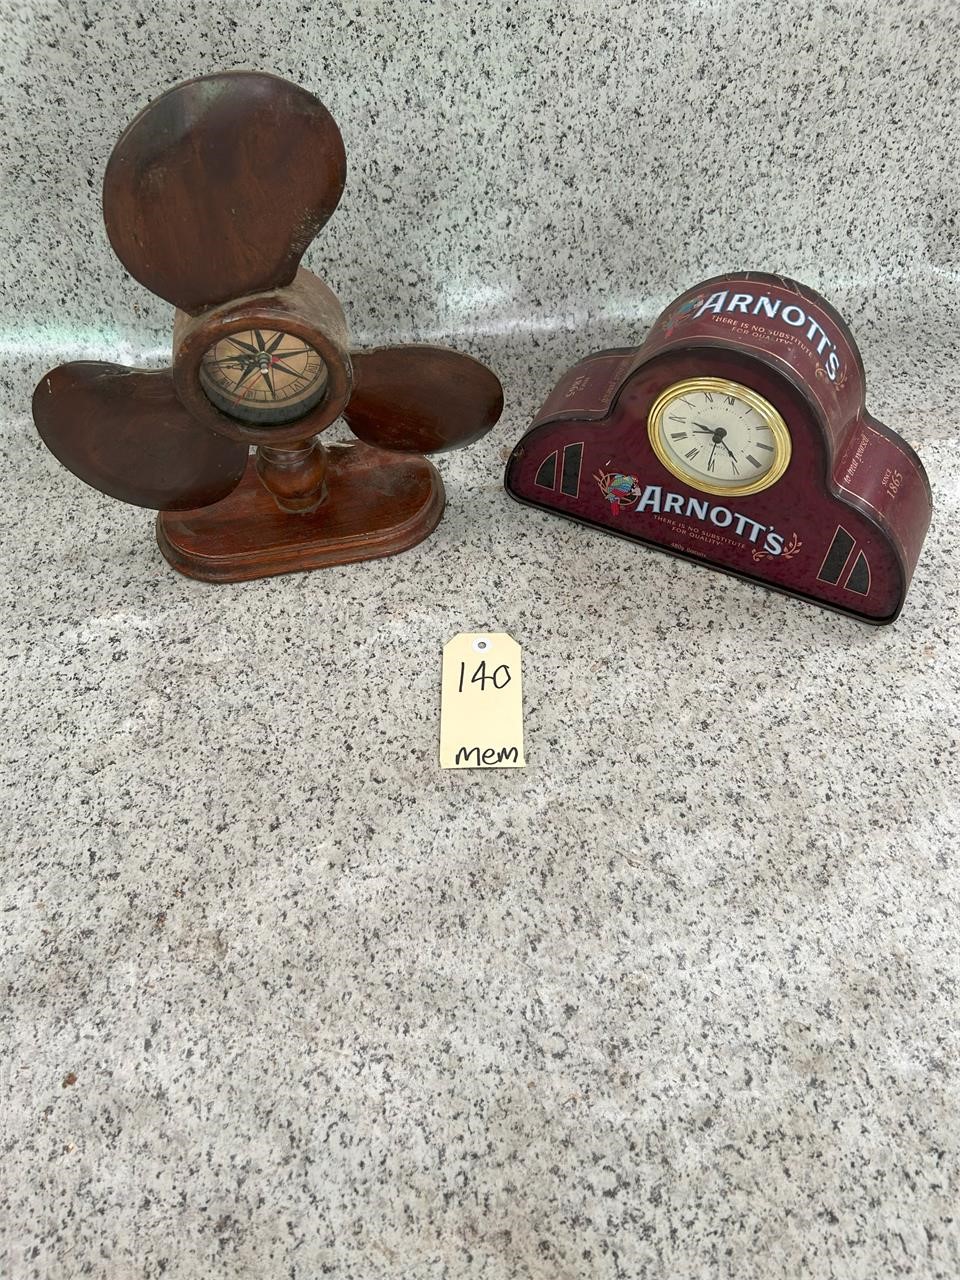 Propellor clock & Arnotts clock